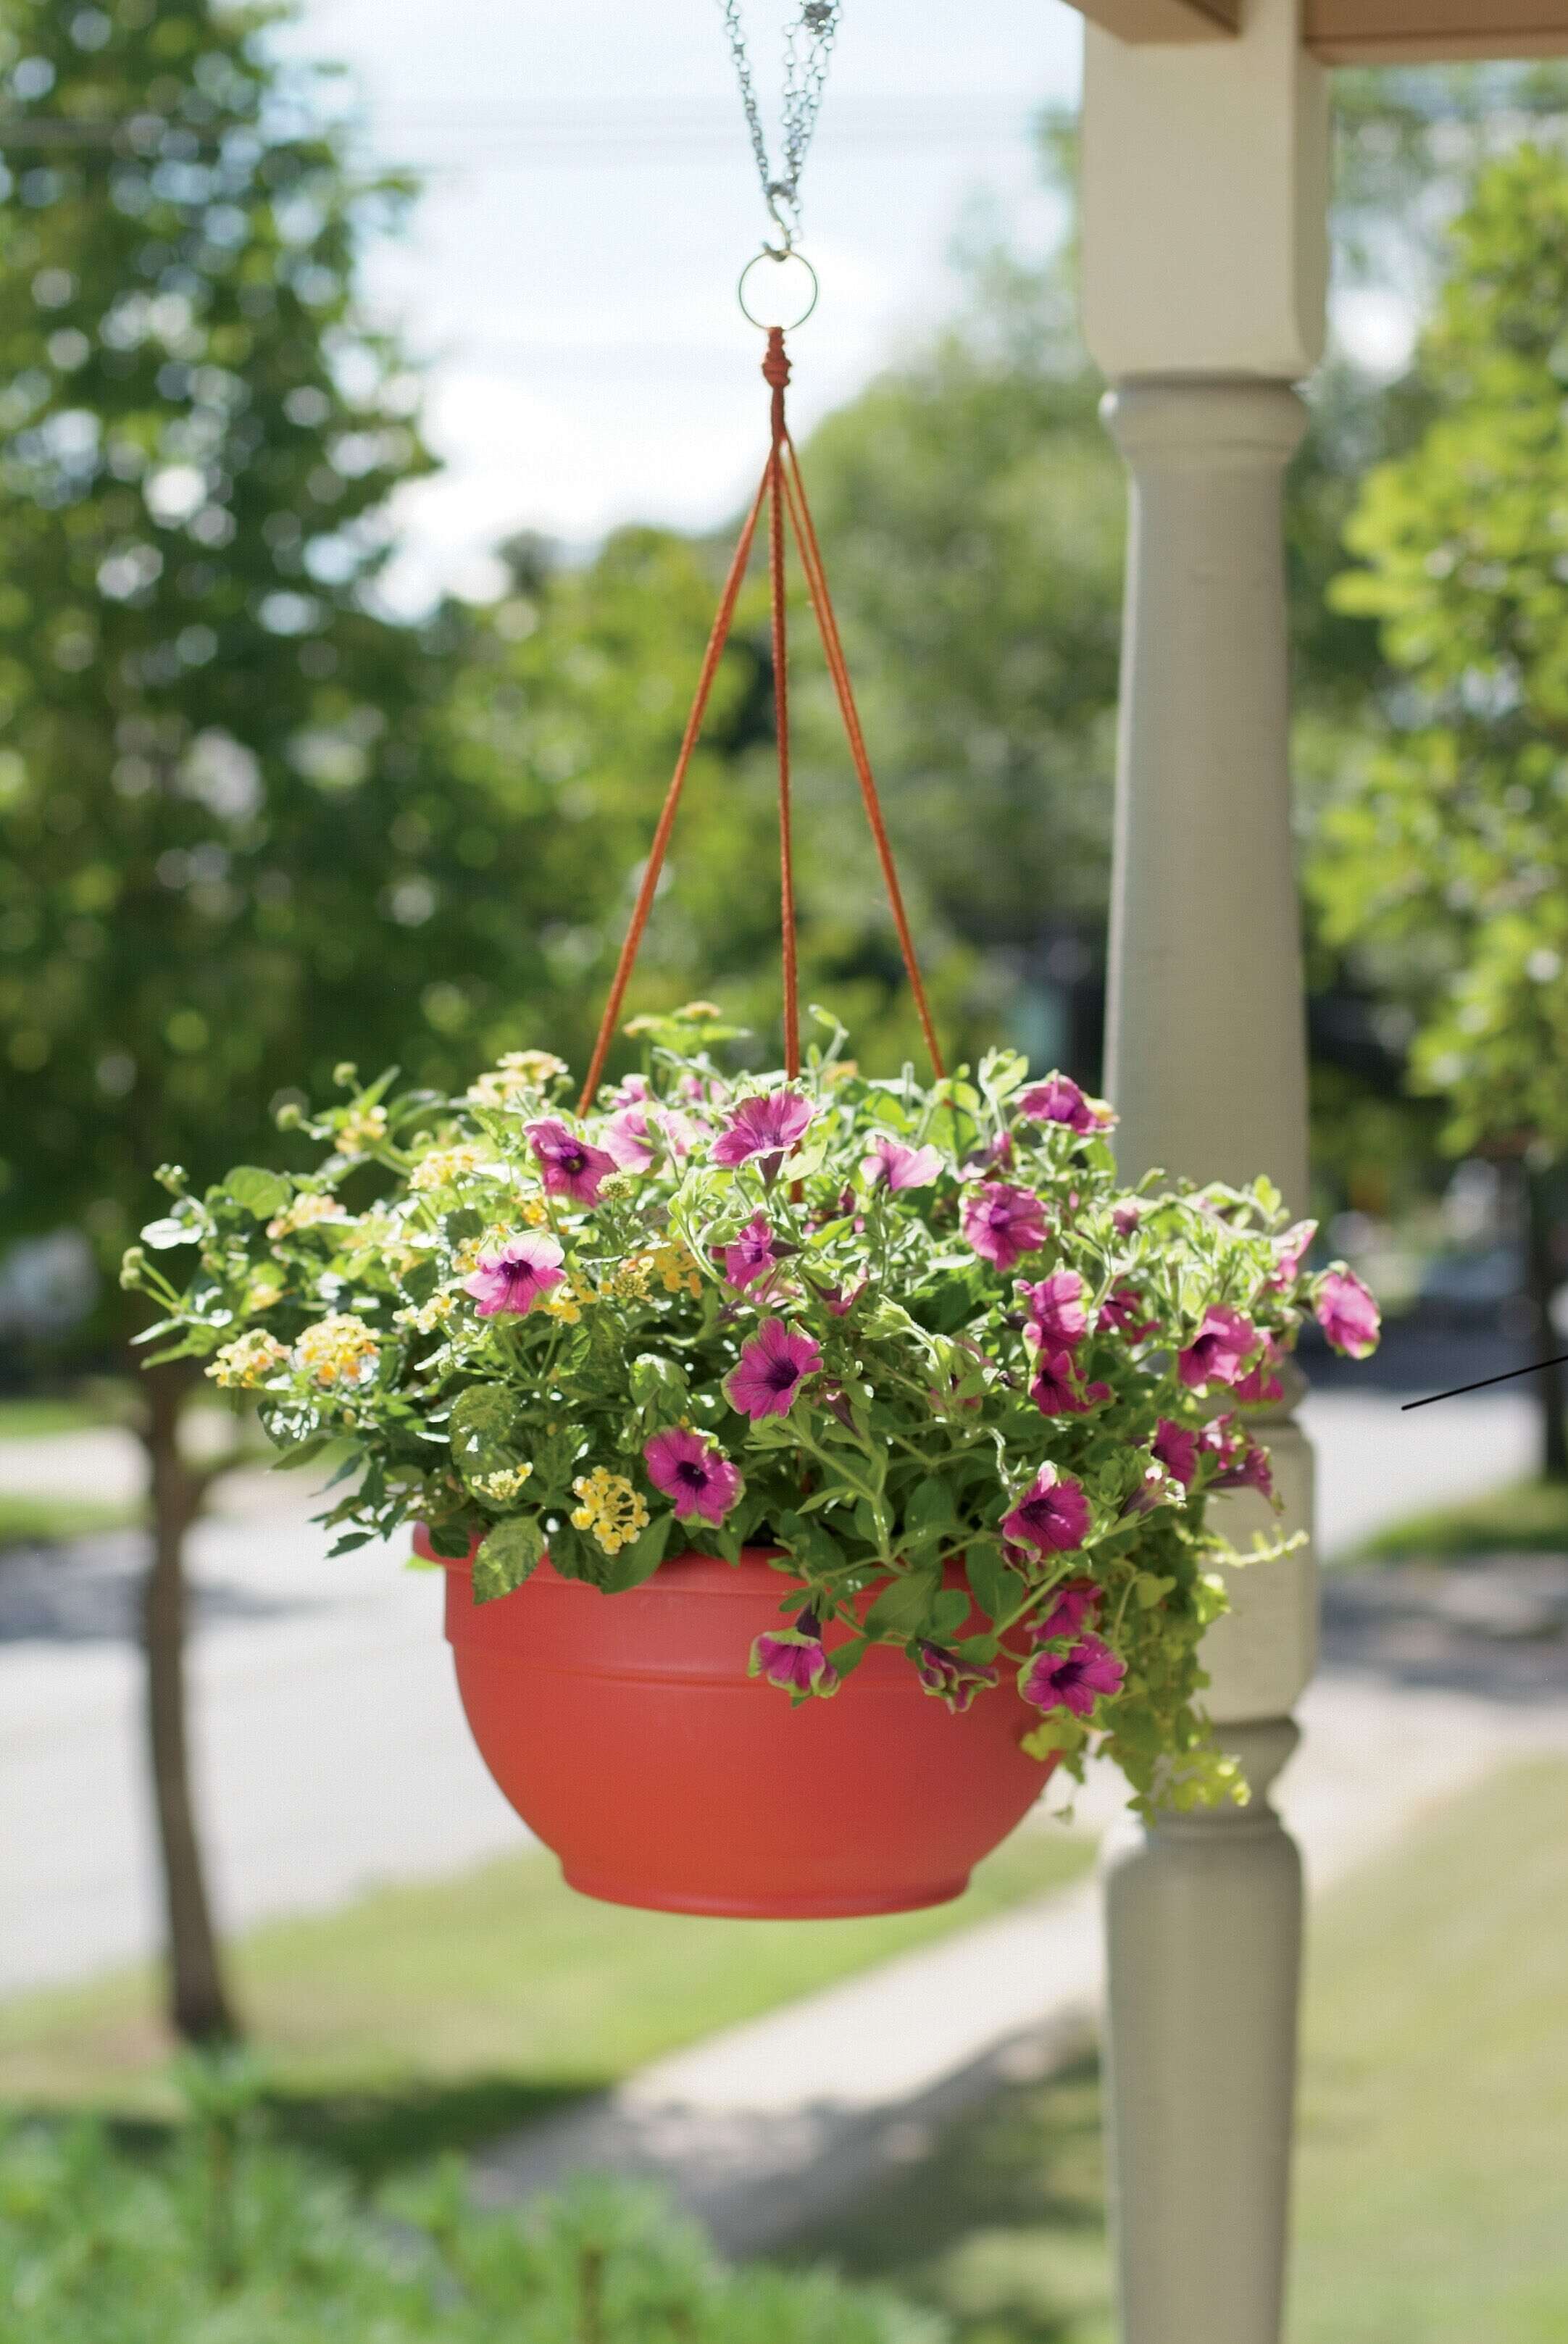 1 X Garden Plastic Hanging Plant Pots Flower Baskets Planters Self Watering Wall 